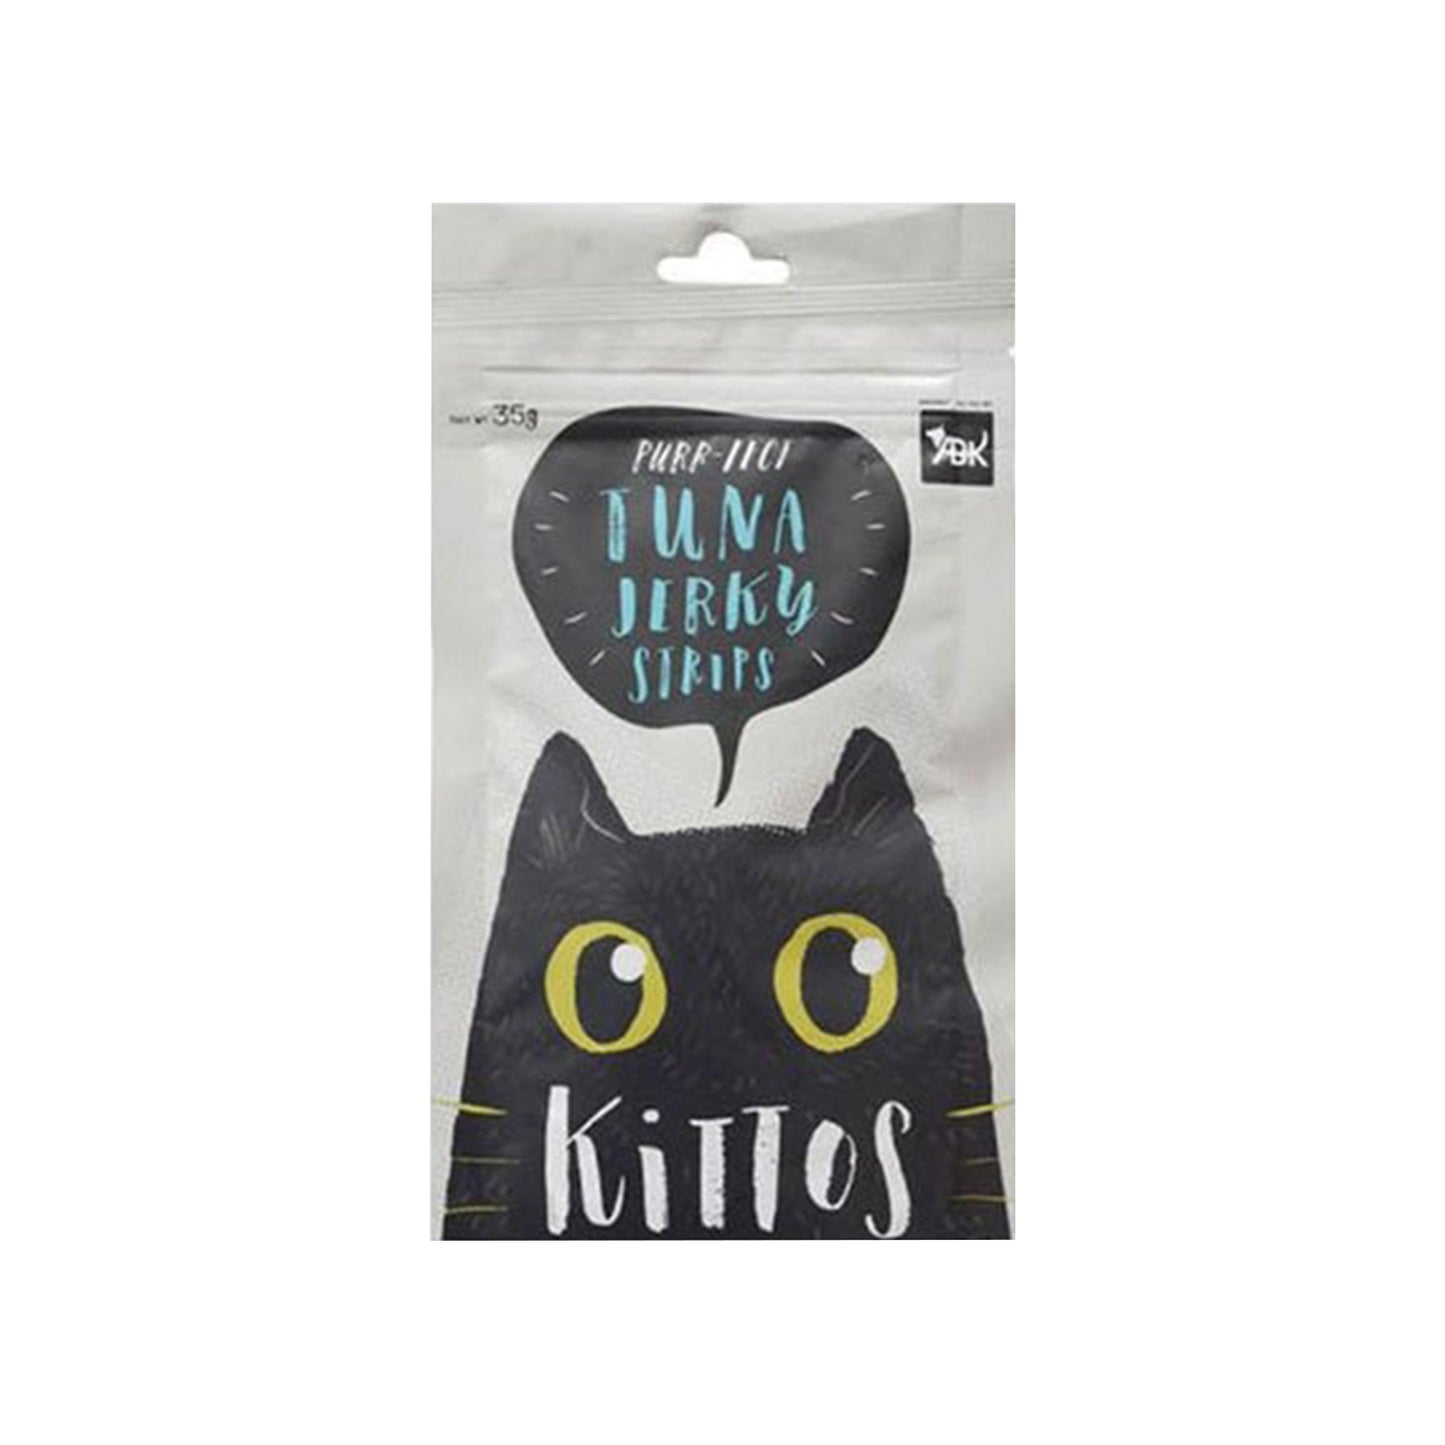 Kittos - Tuna Jerky Strips Cat Treat